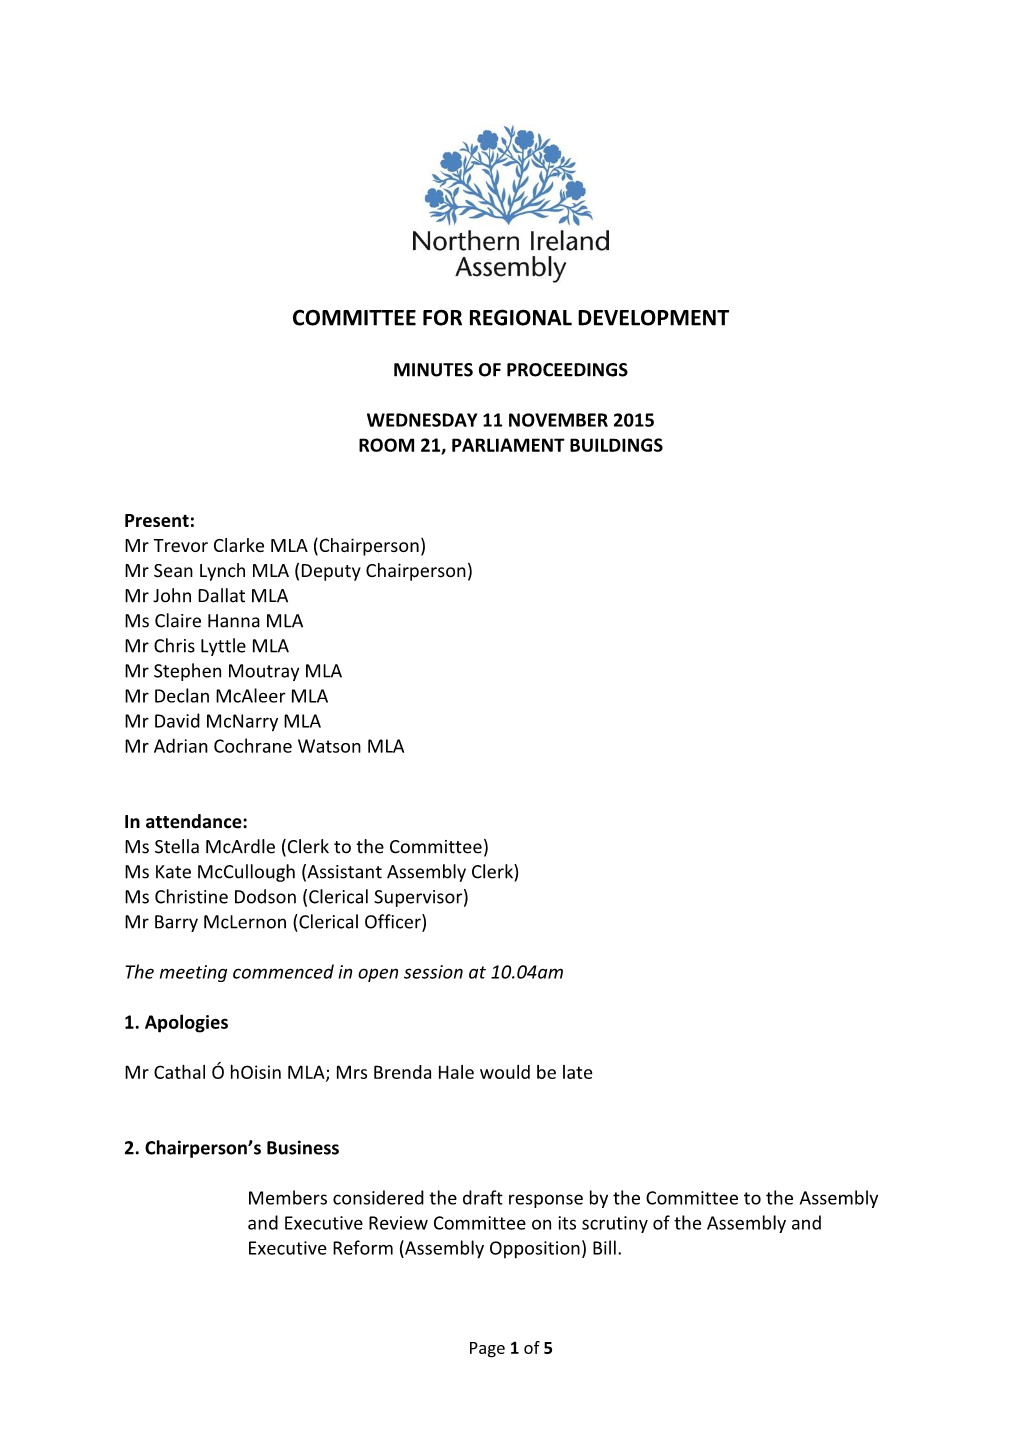 Committee for Regional Development